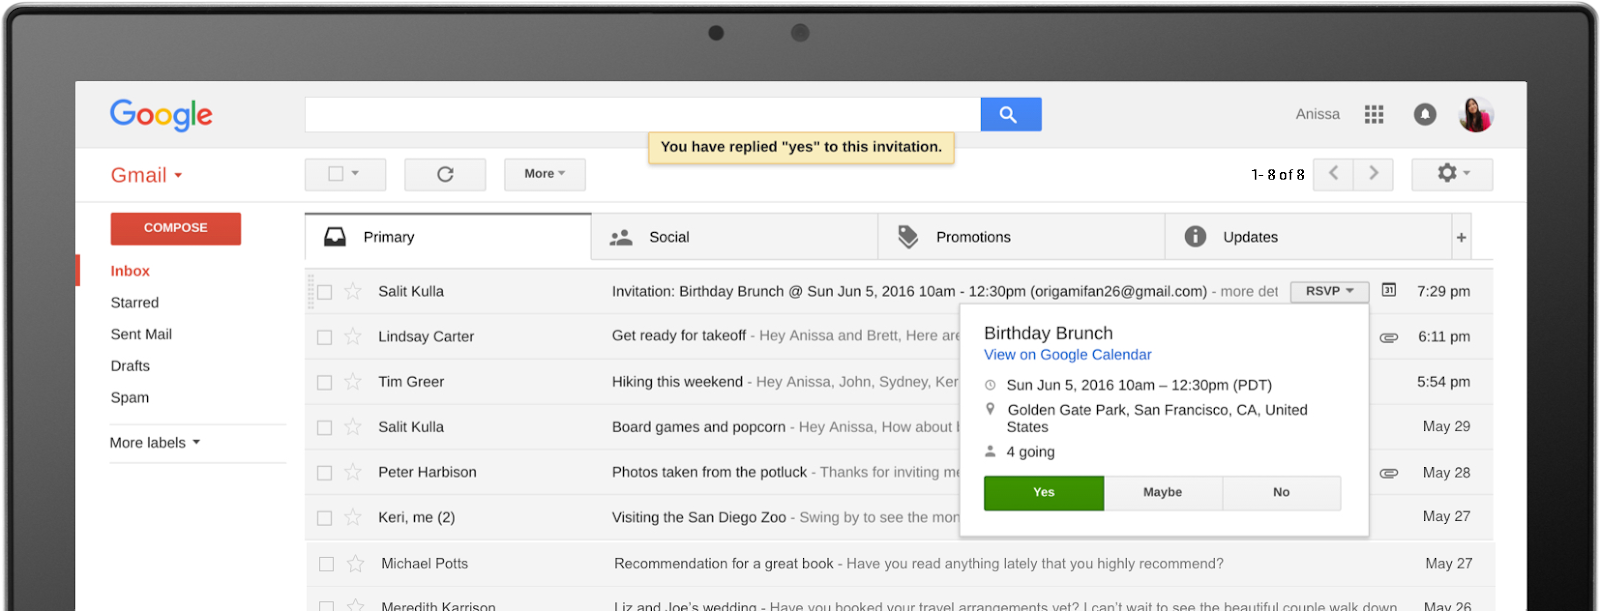 Us gmail. Google почта. Гмайл почта. Gmail картинка. Почтовый сервис gmail.